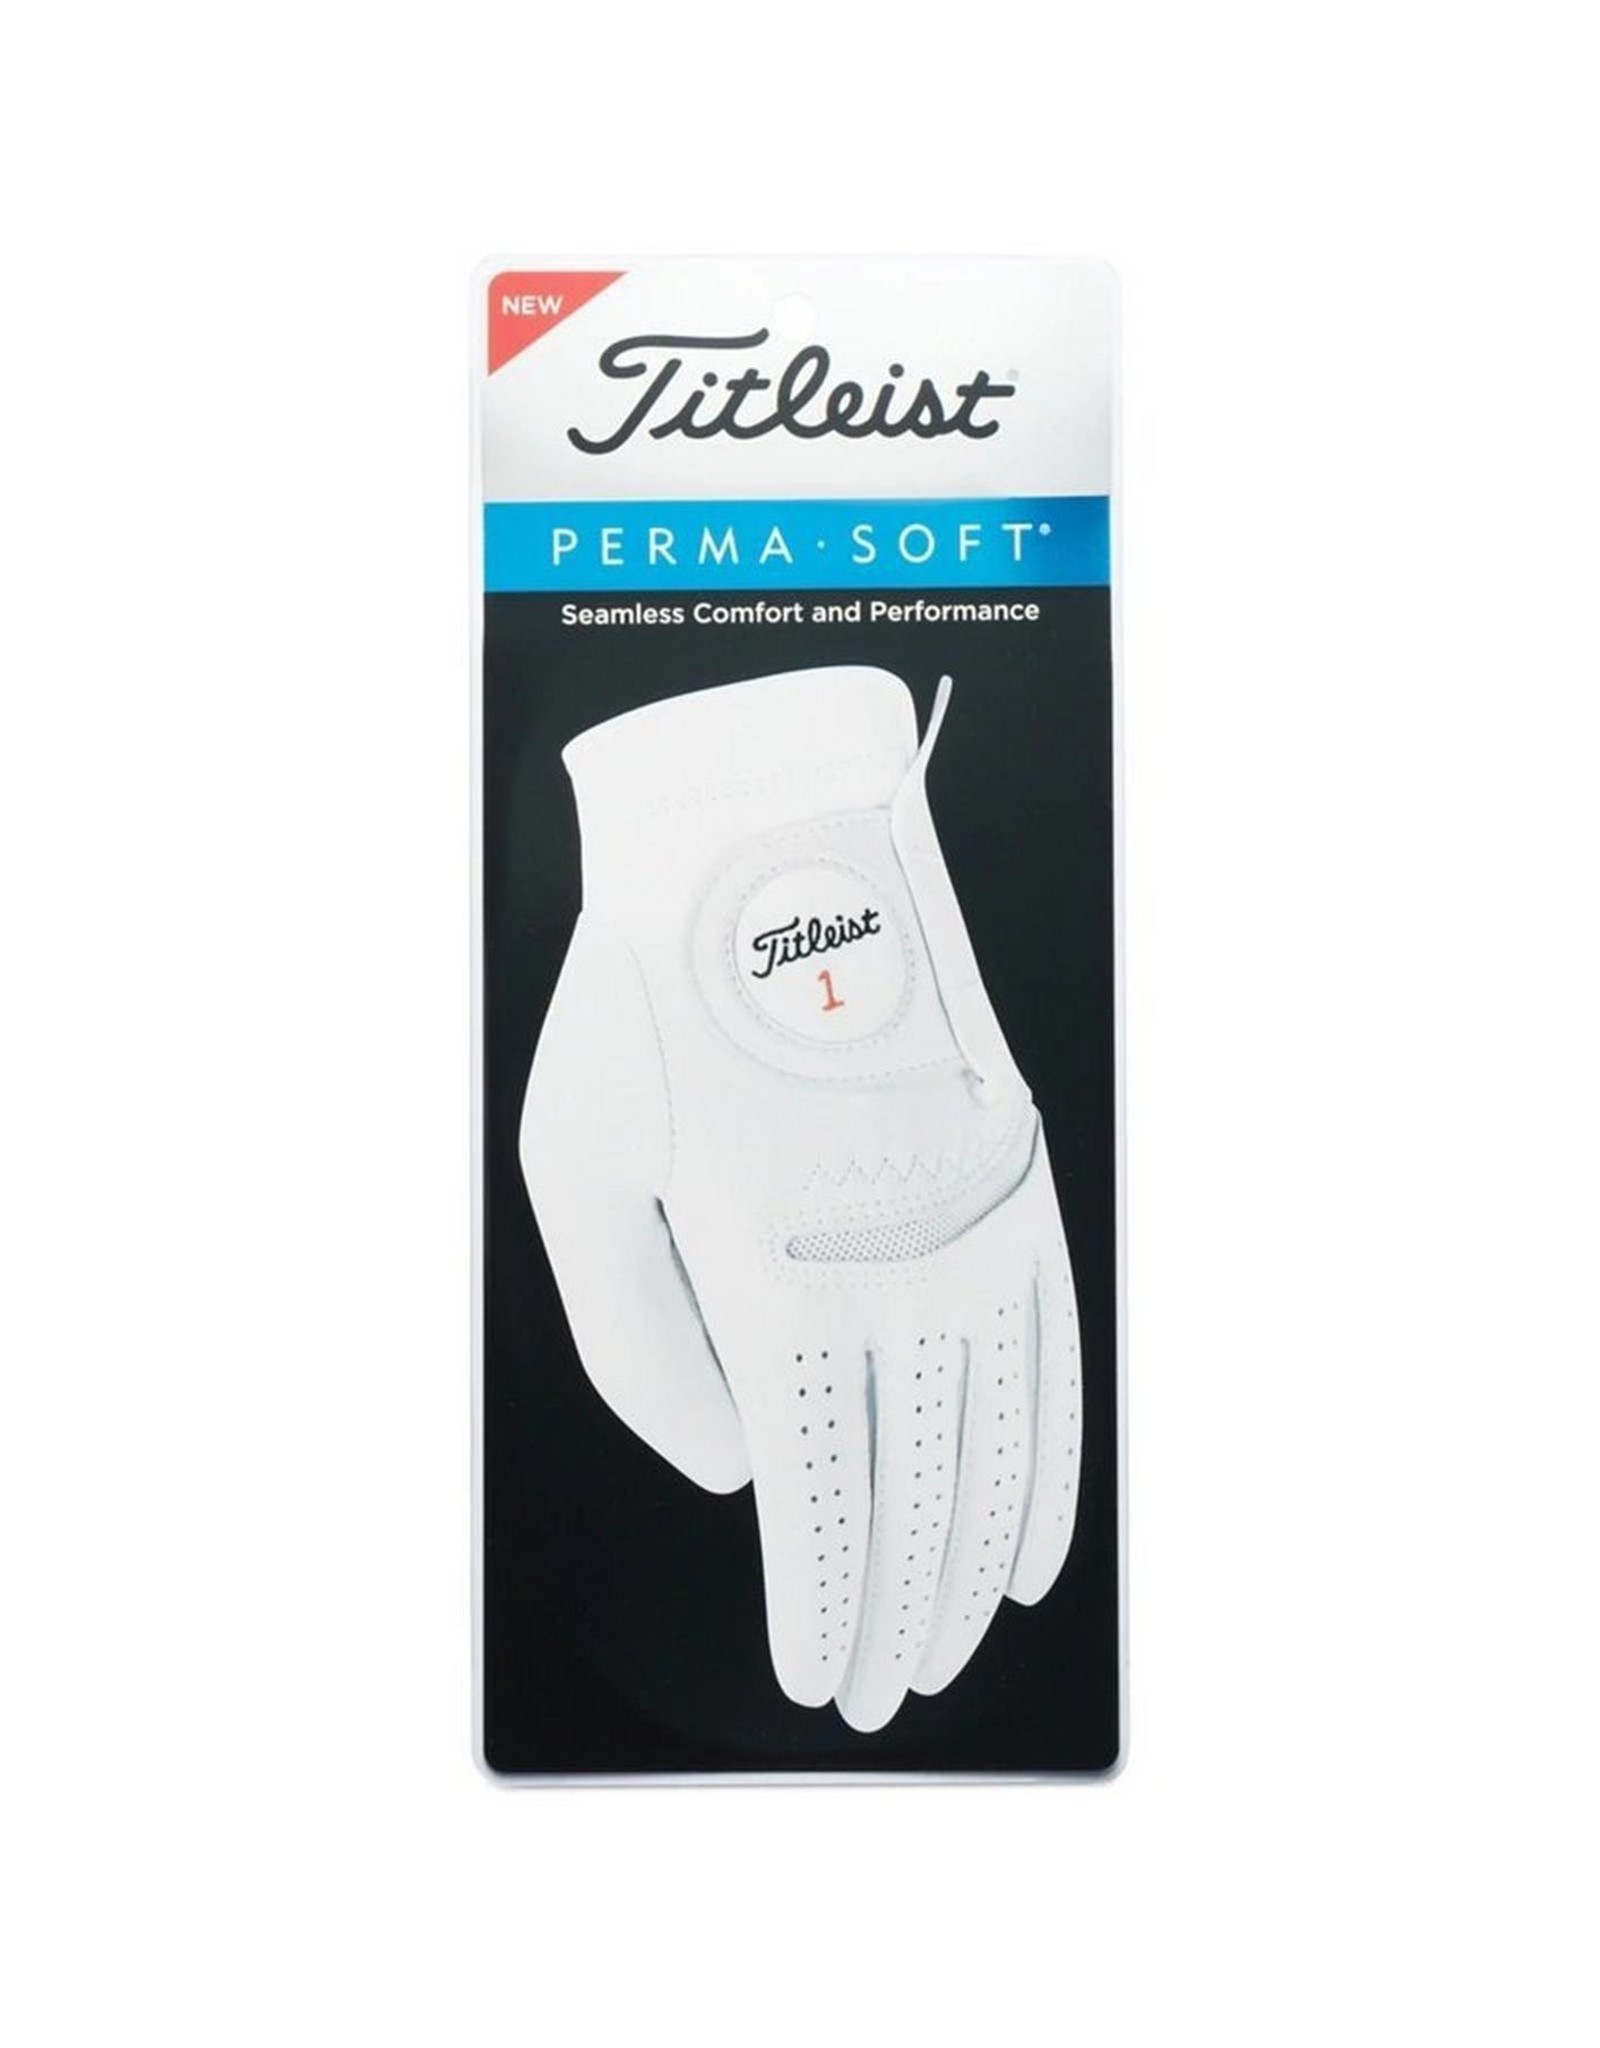 Titleist PermaSoft Glove